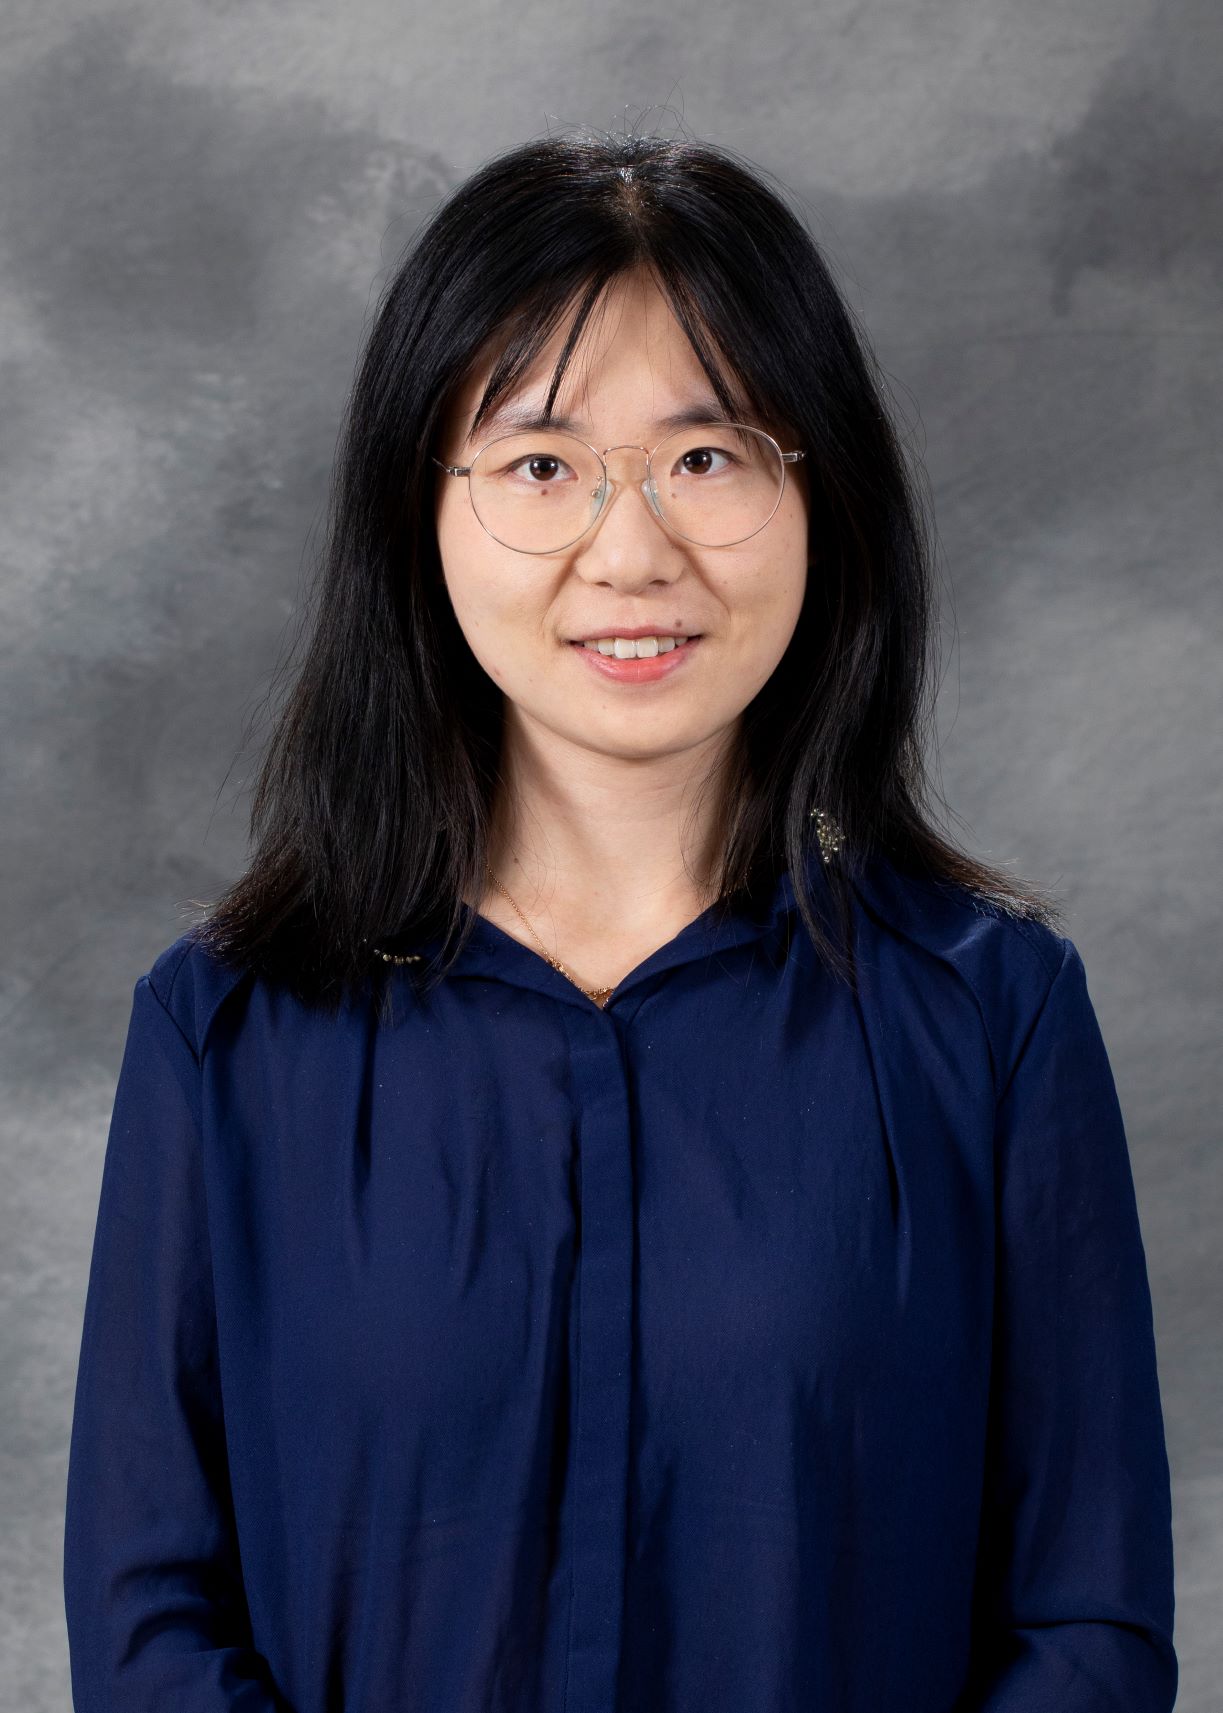 Dr. Ying Liang